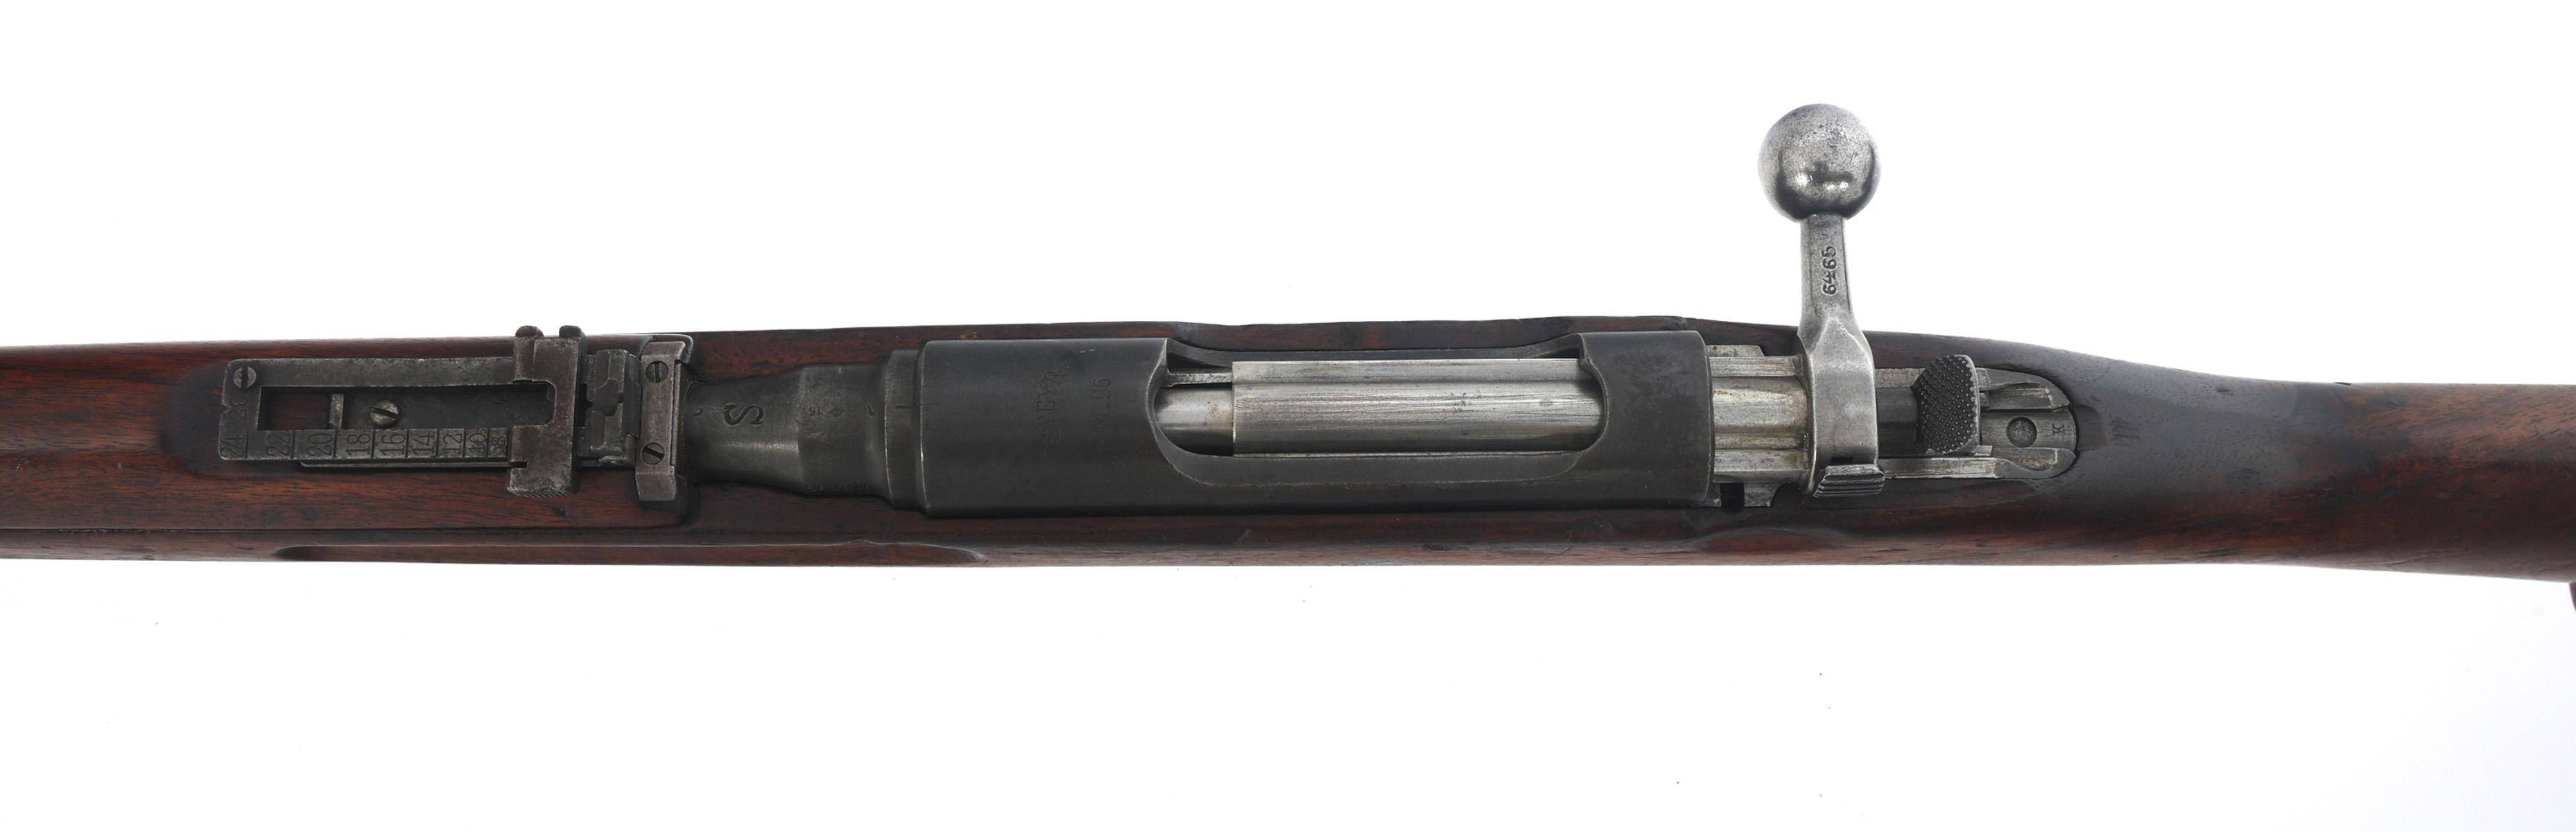 GERMAN STEYR MODEL 1895/30 8x56mmR CALIBER RIFLE